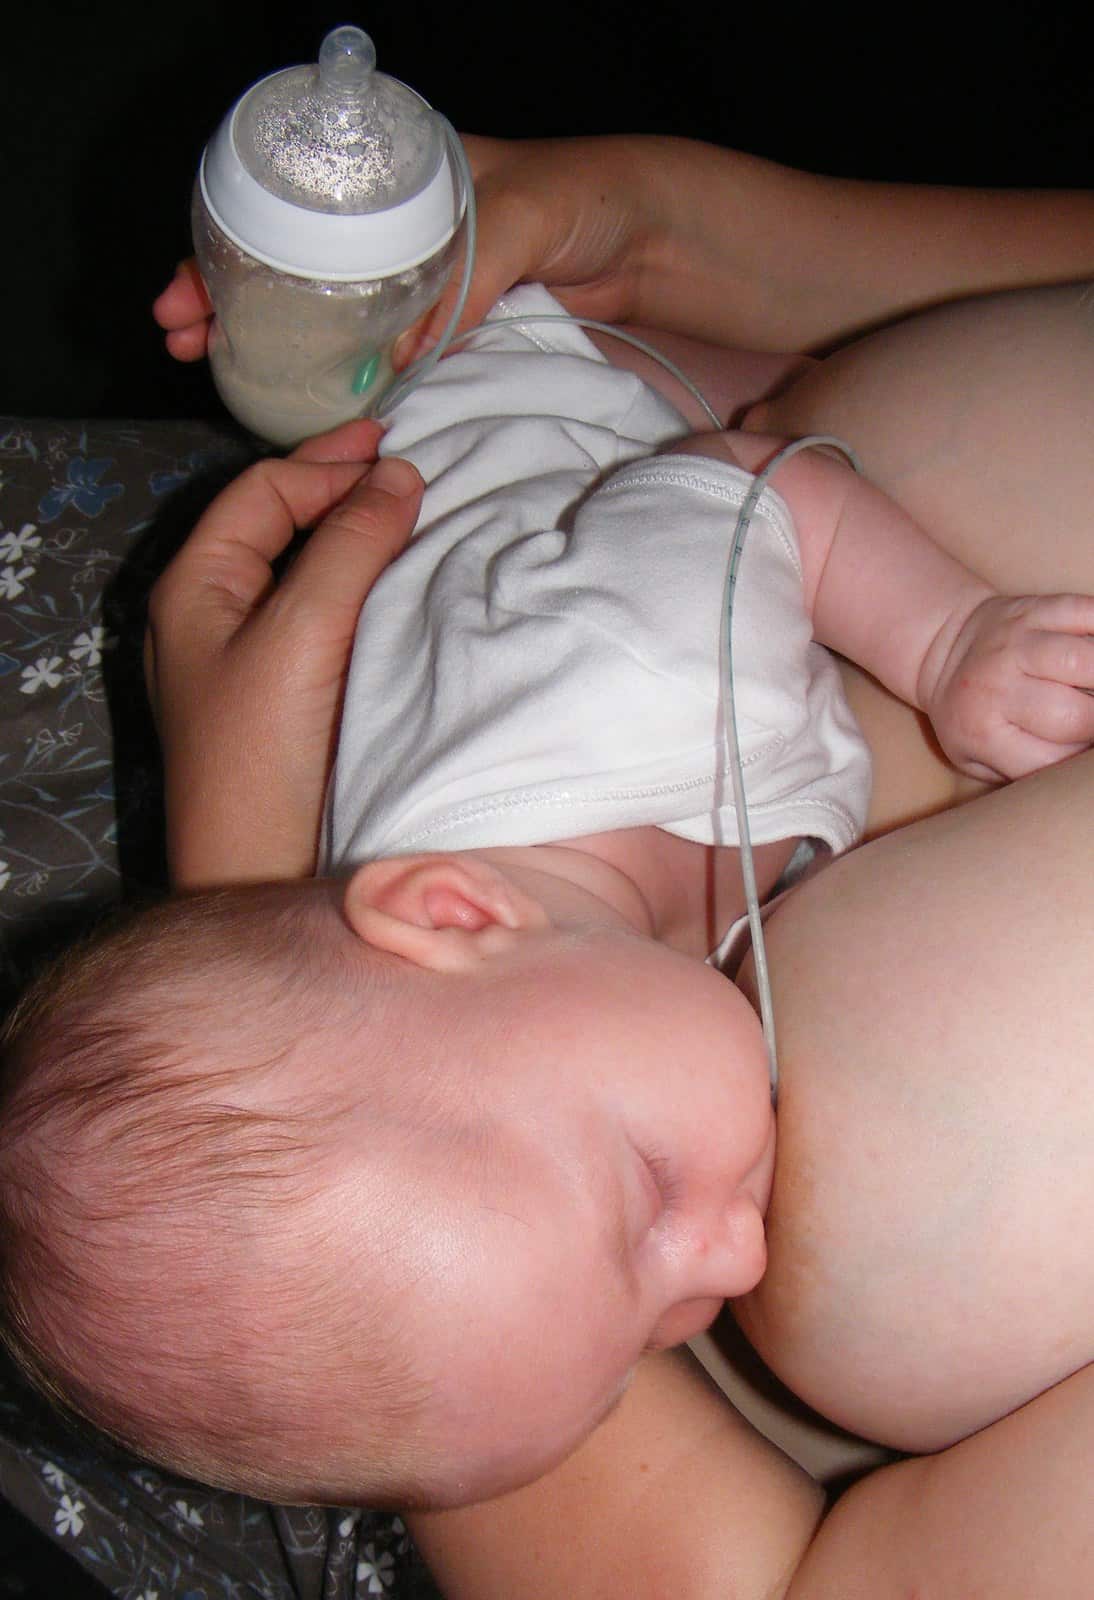 Adoptive Breastfeeding: The Ultimate Guide - Guide To Adoptive Breastfeeding